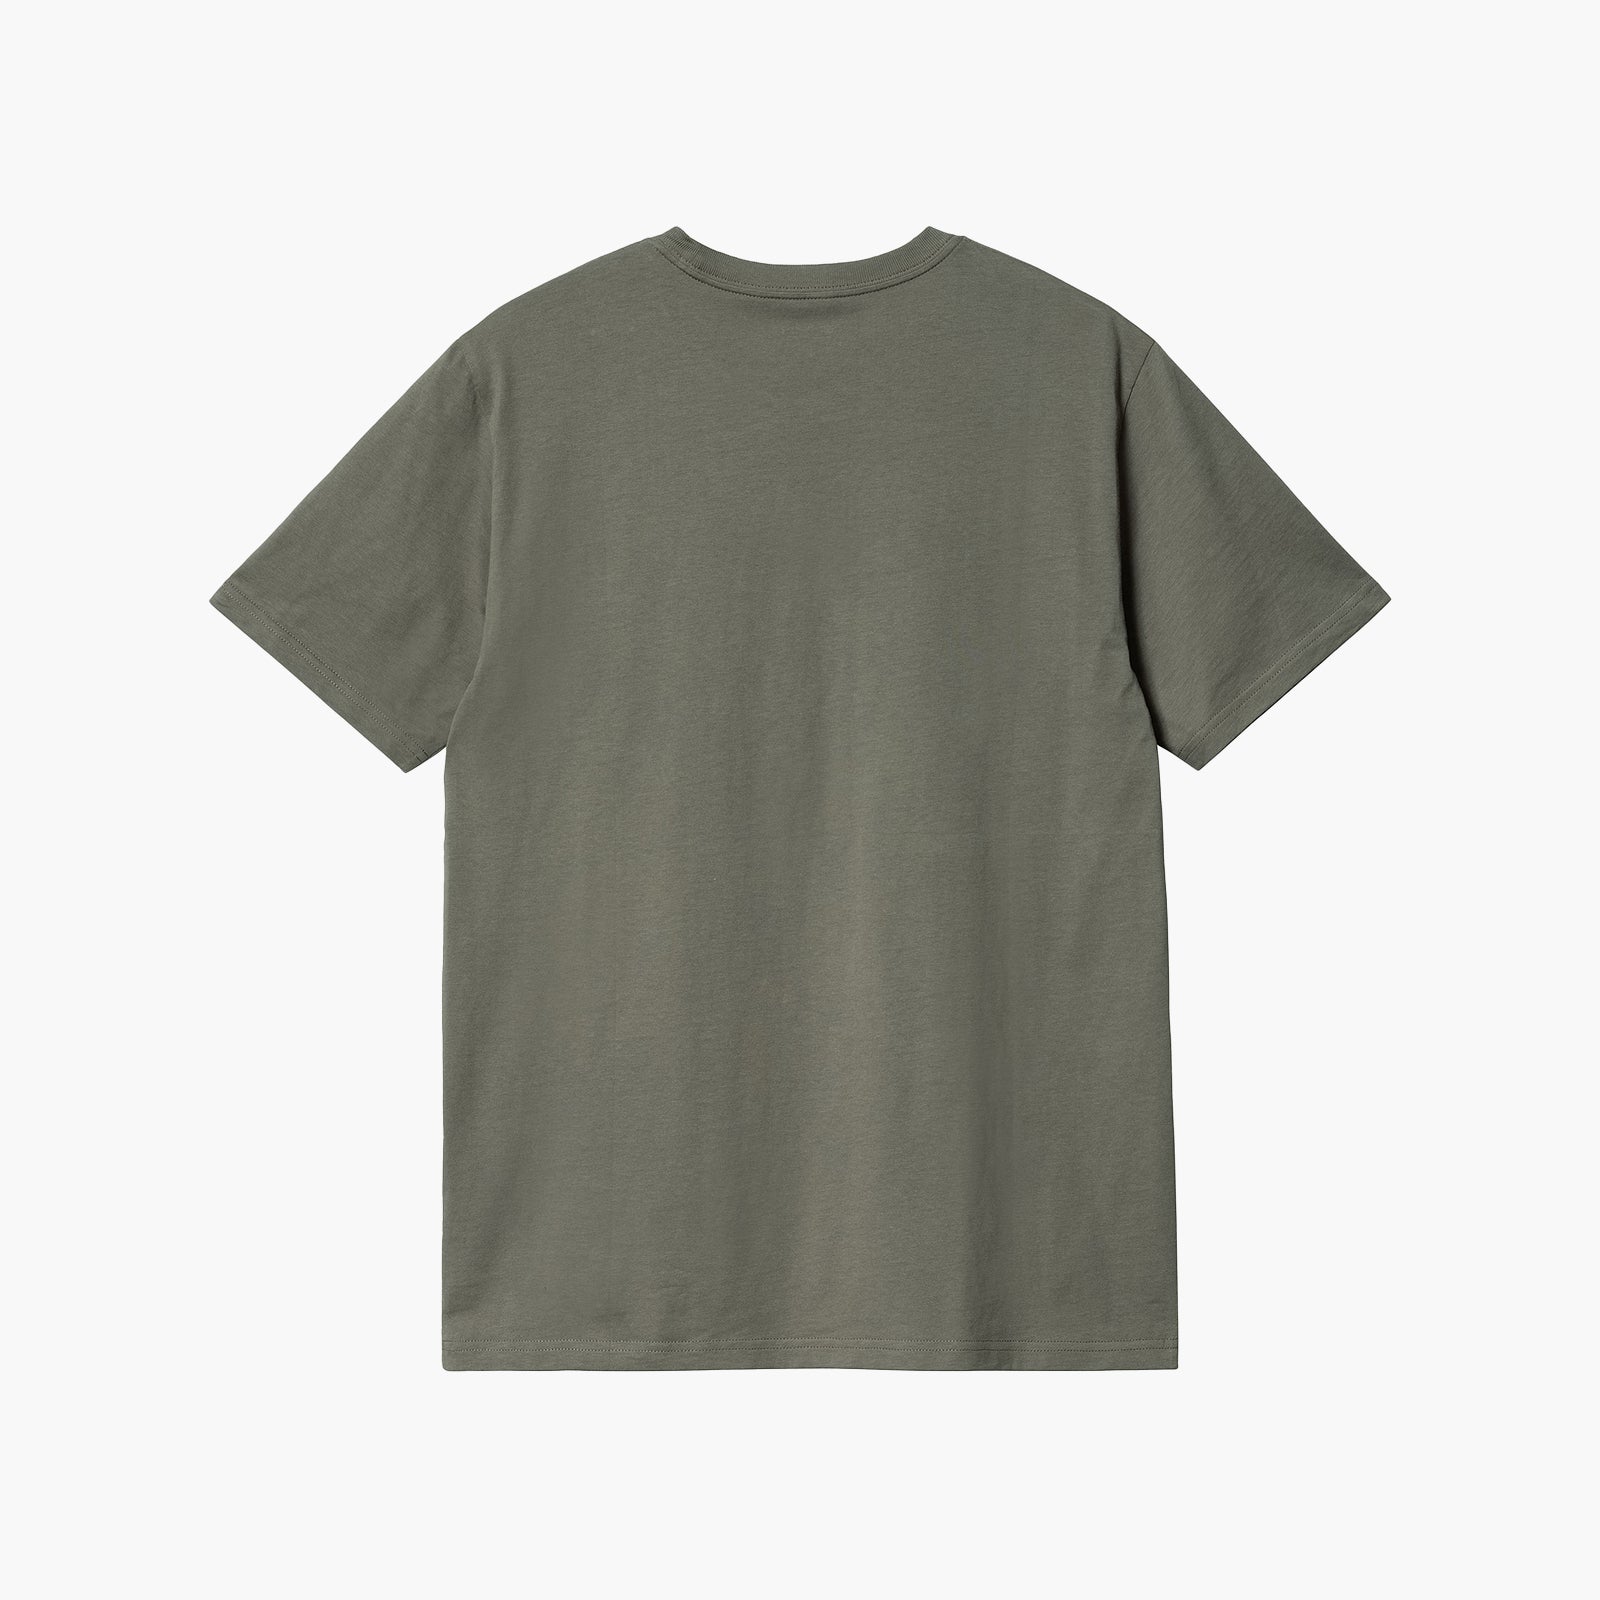 Carhartt Wip Pocket T-Shirt